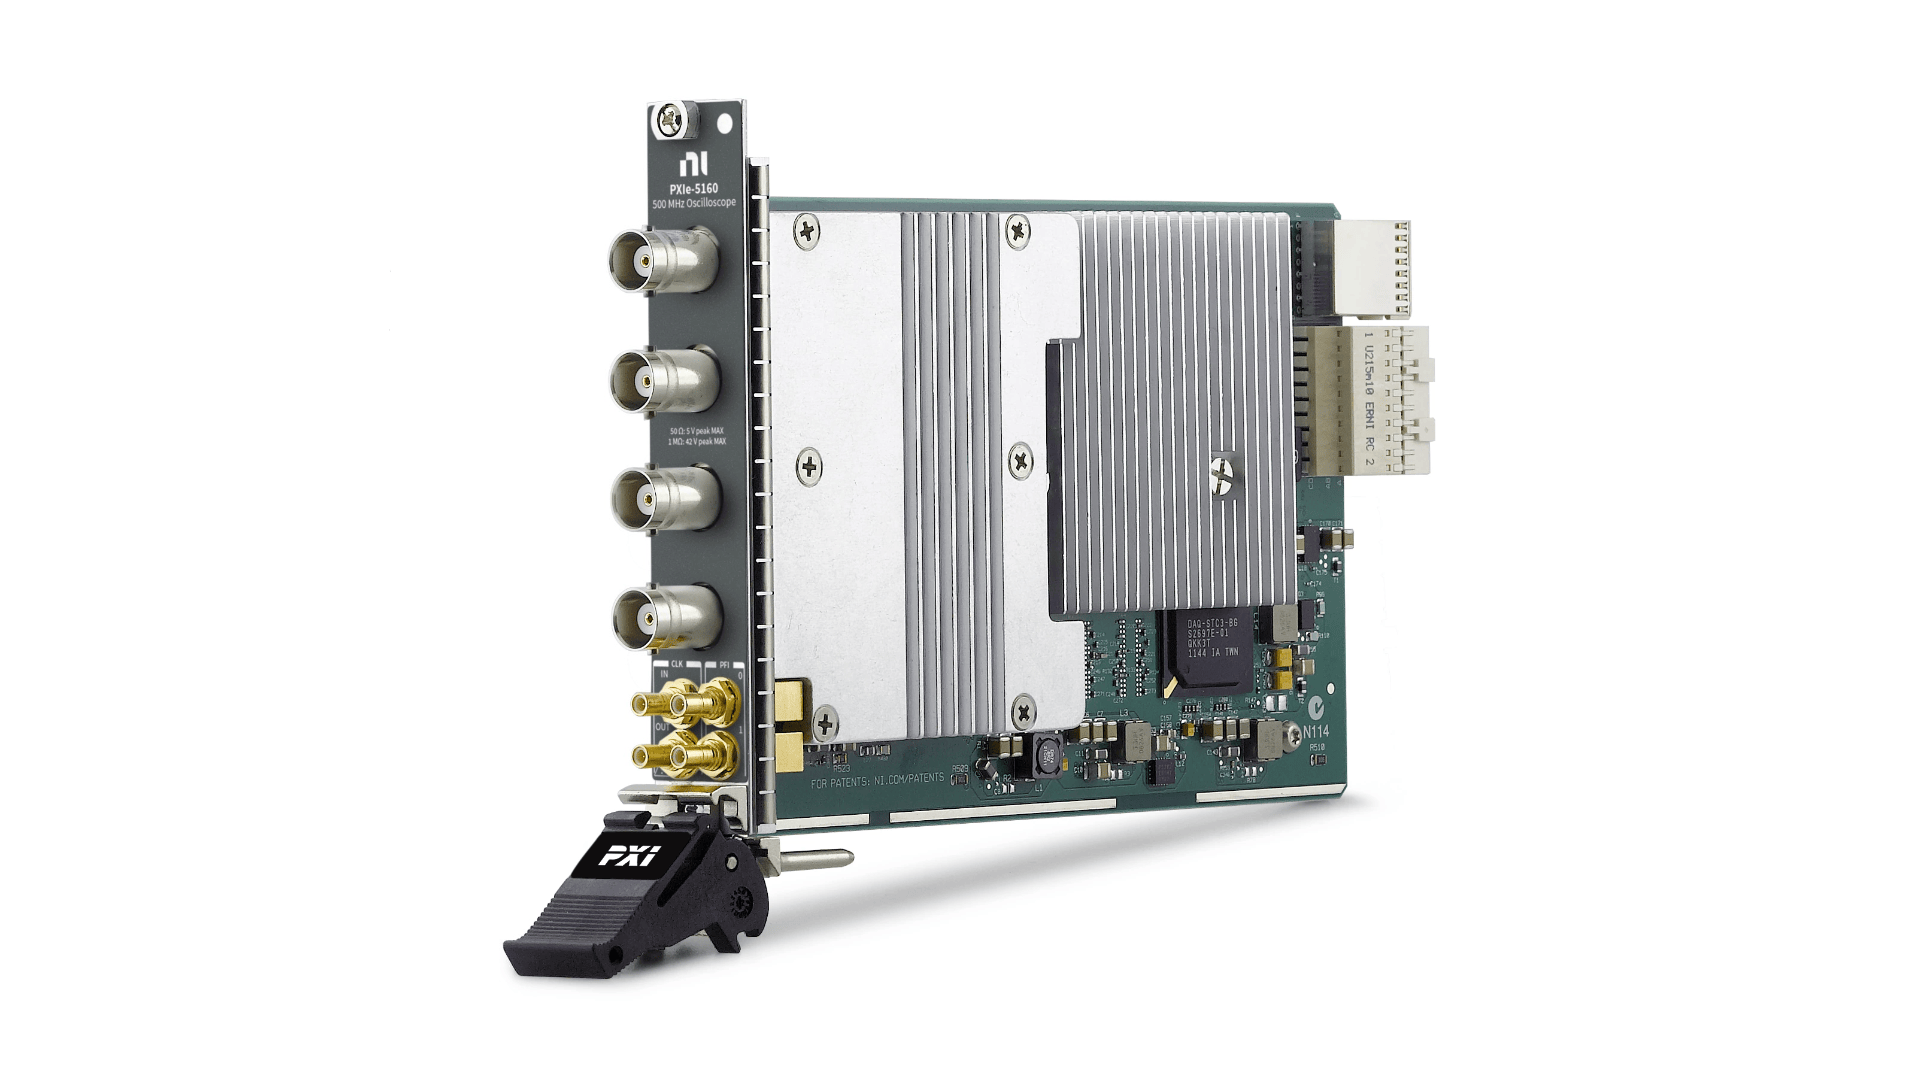 National Instruments PXI-5160 2.5 GS/s, 10-Bit Oscilloscope/Digitizer